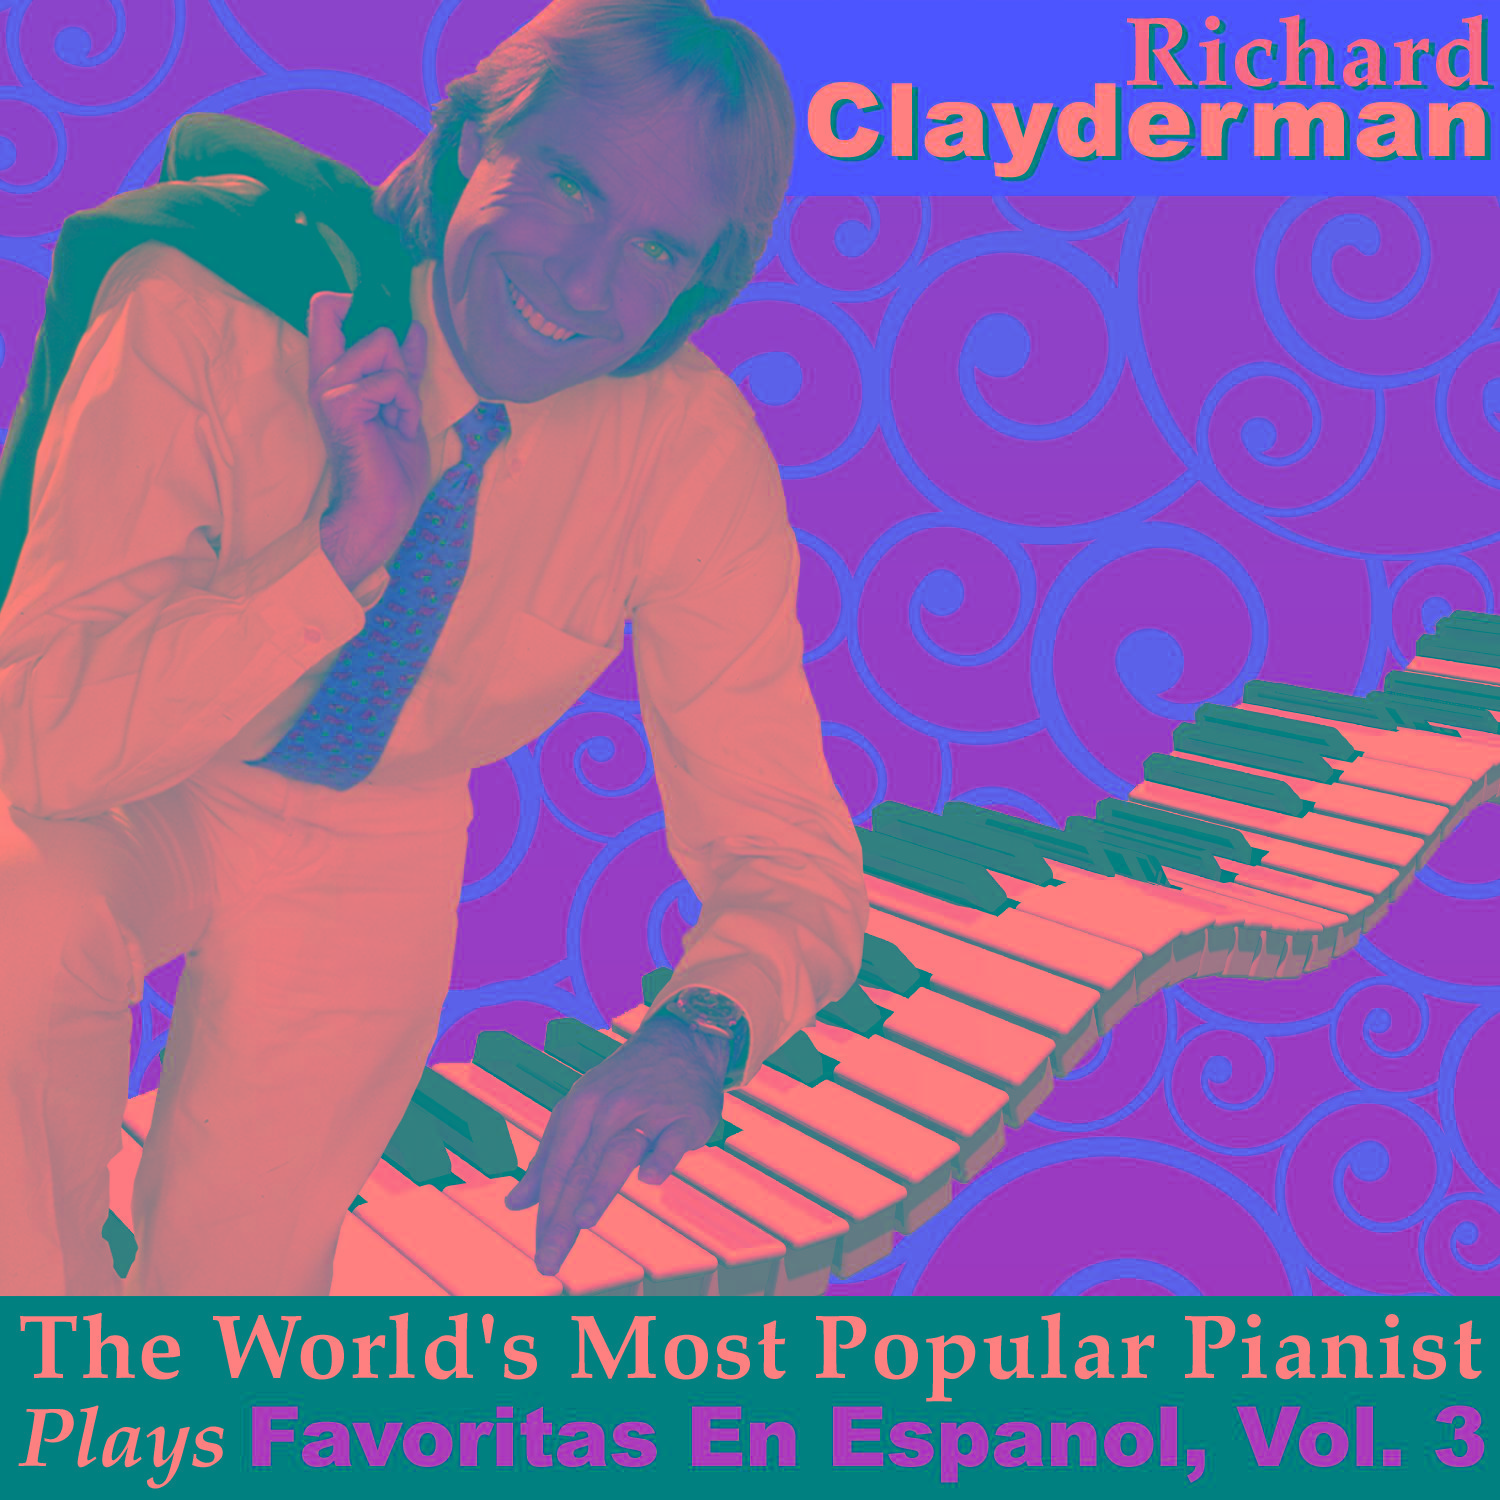 The World's Most Popular Pianist Plays Favoritas En Espanol, Vol. 3